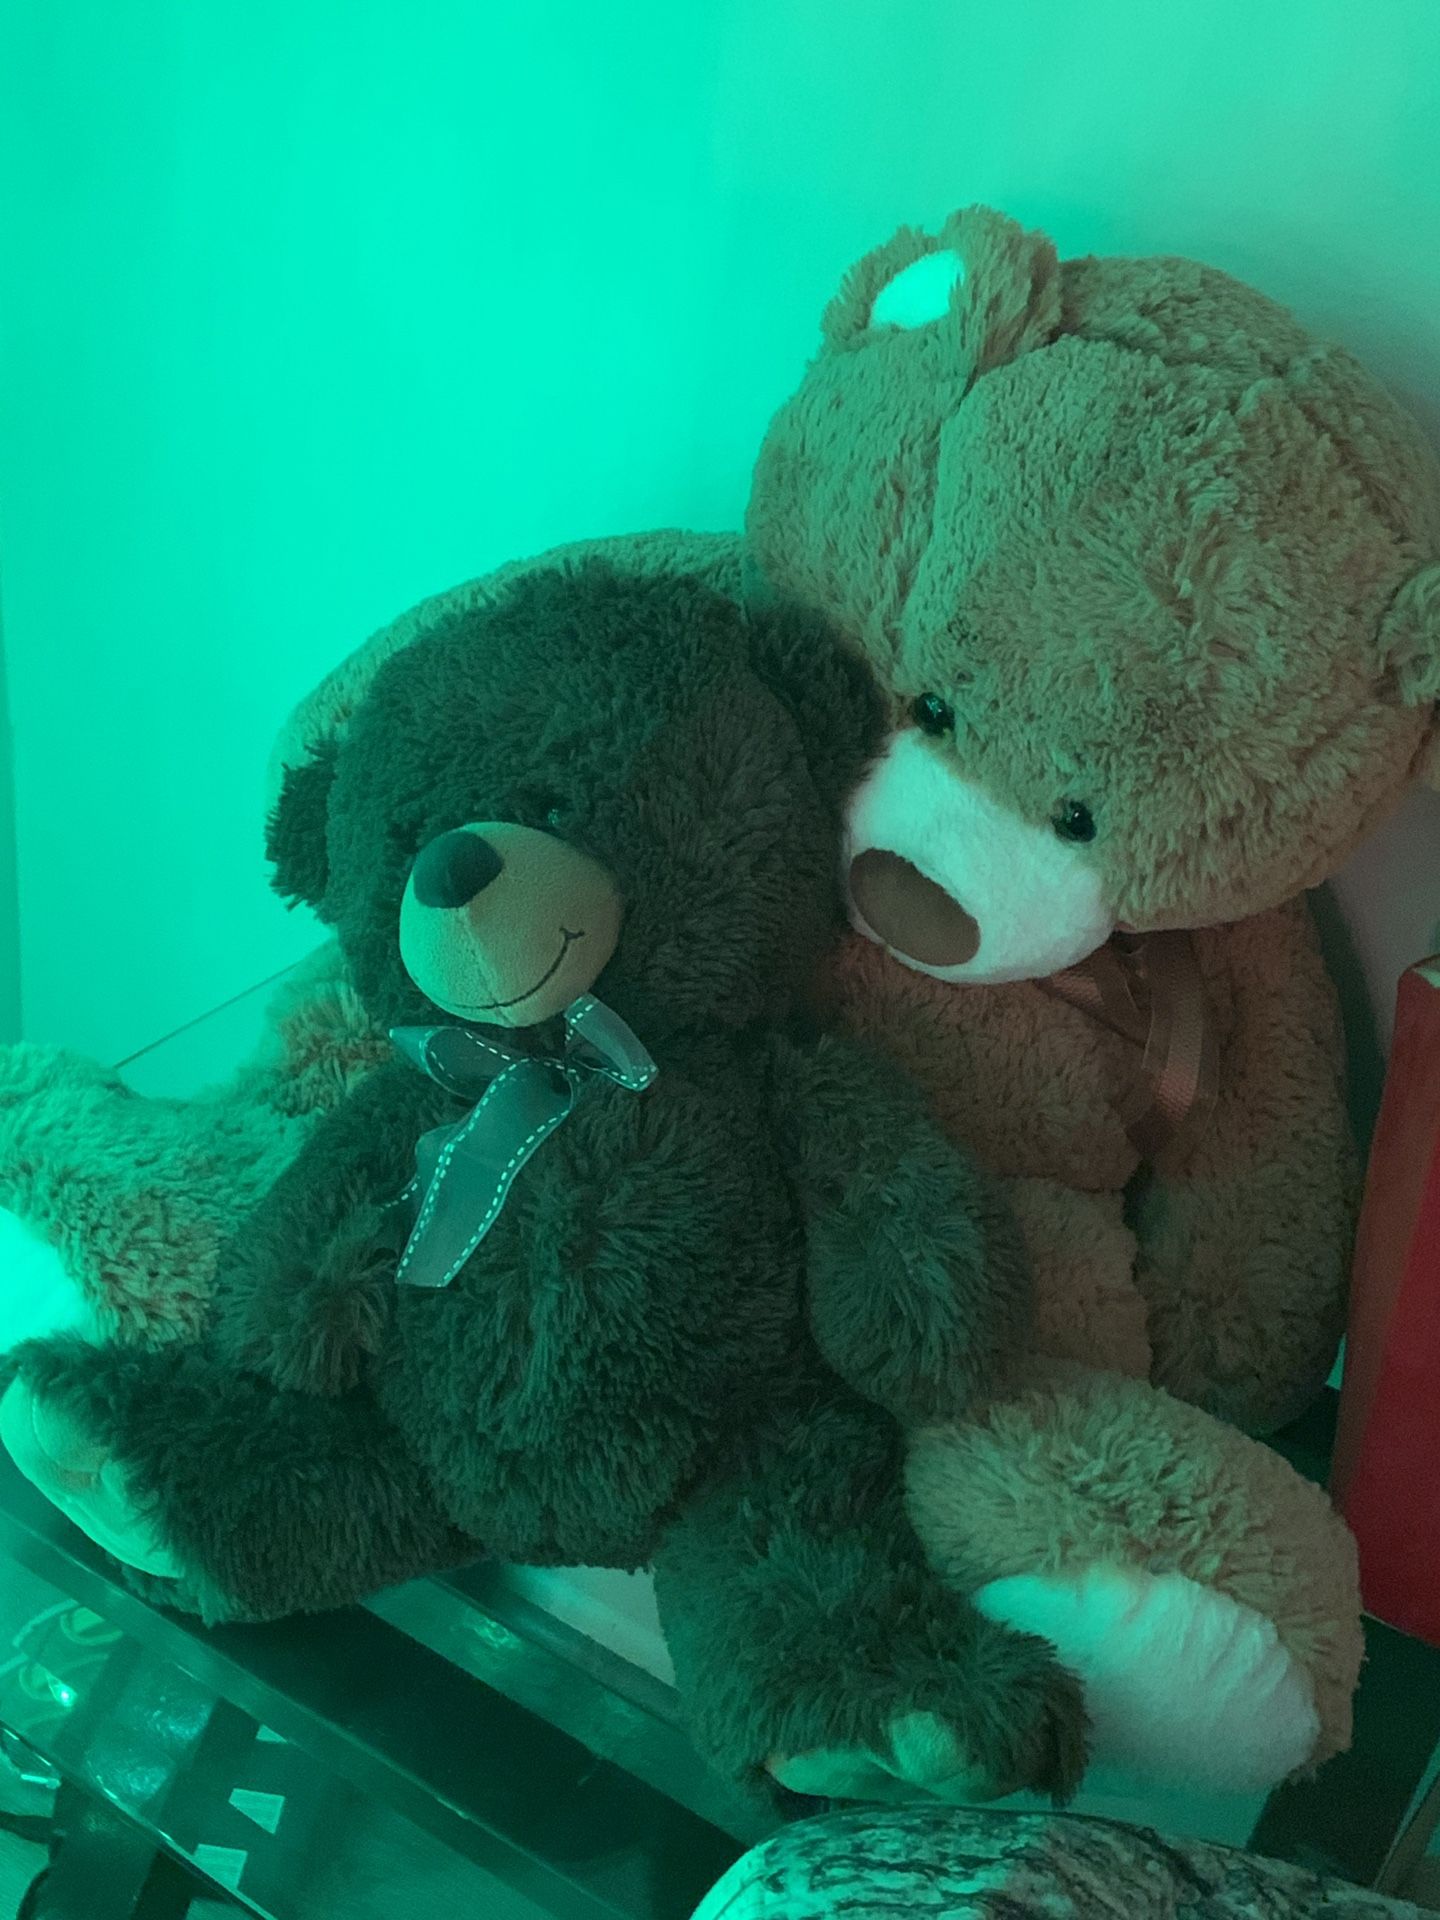 GIANT TEDDY AND NORMAL SIZE TEDDY BEAR